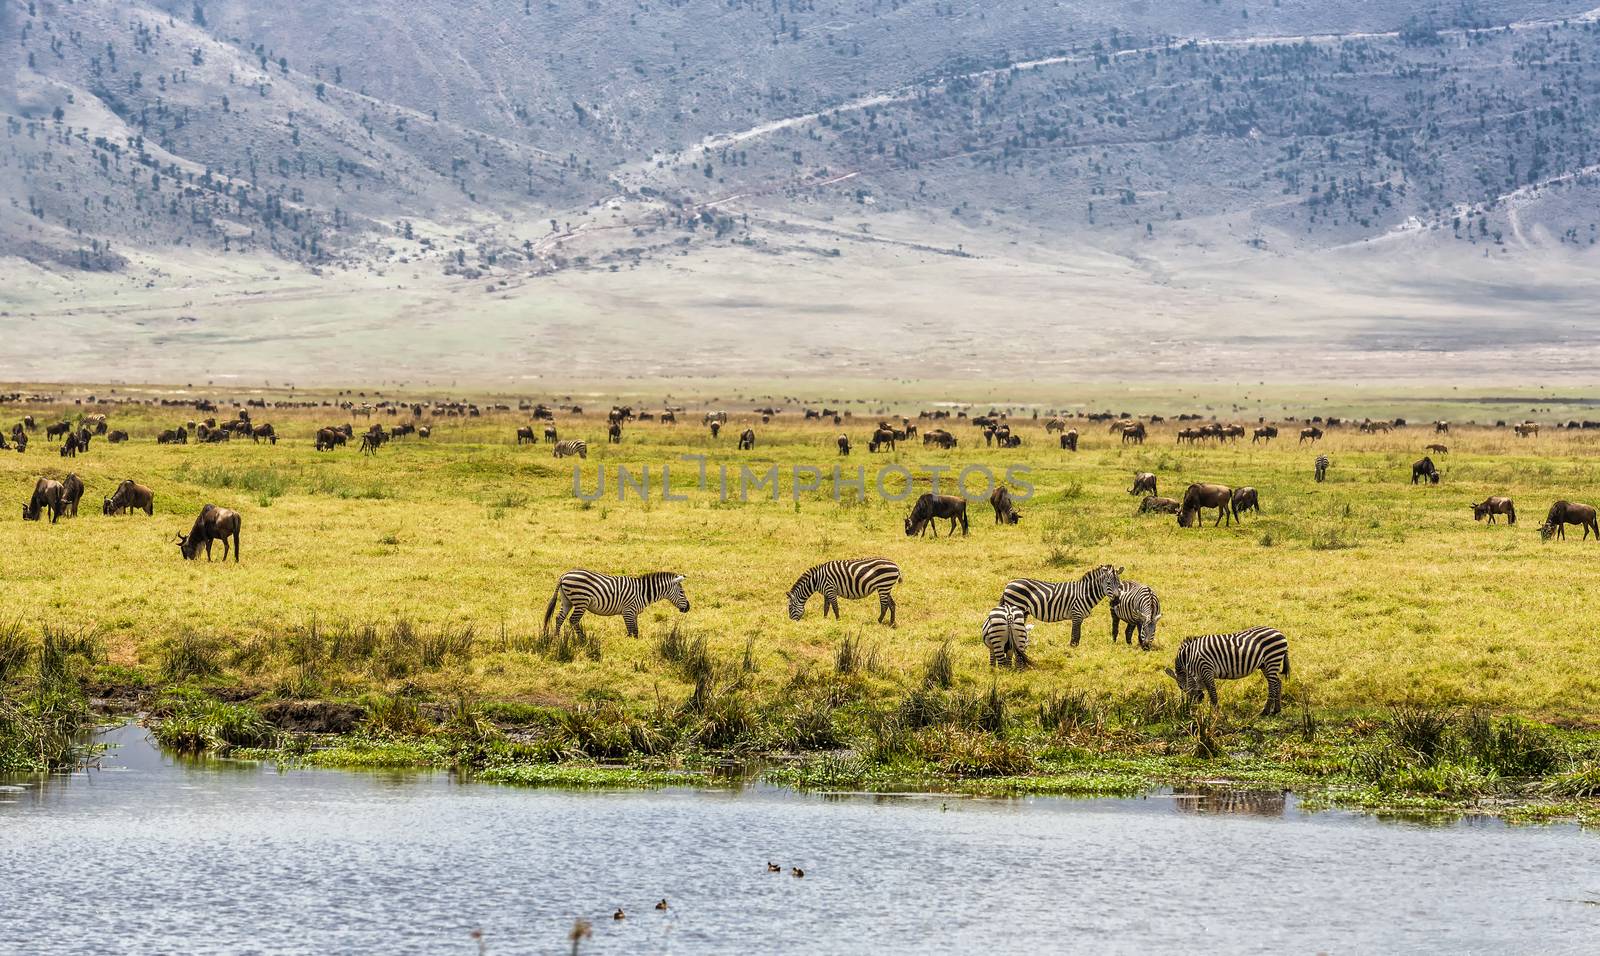 Herds of wildebeests and zebras  by nickfox